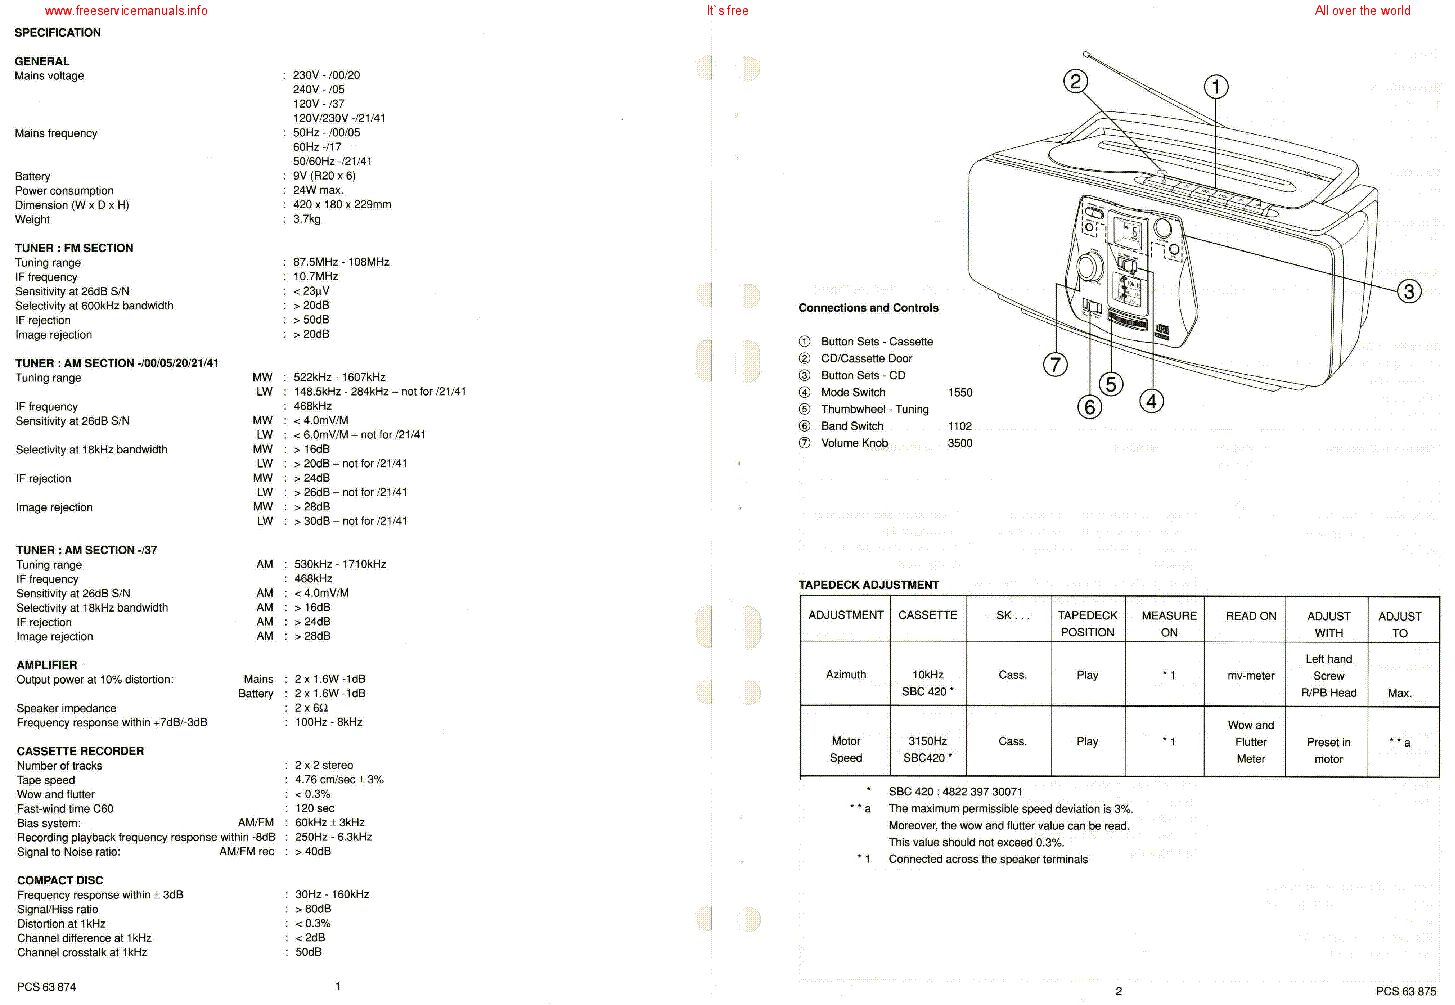 PHILIPS AZ8040 SM service manual (2nd page)